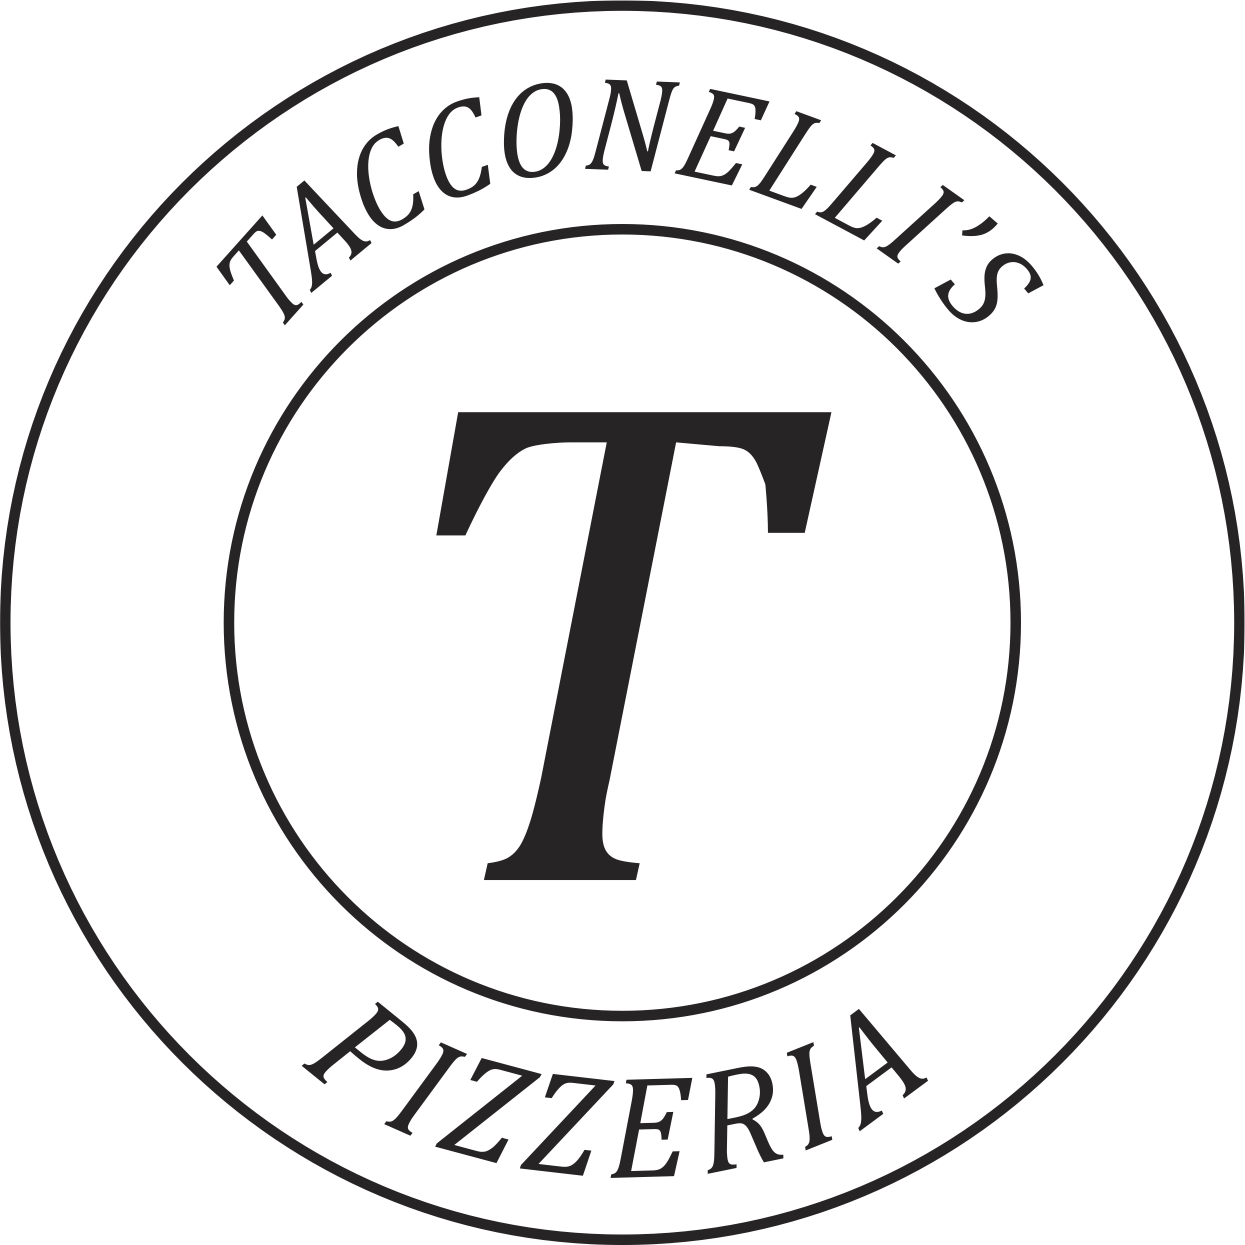 Tacconelli's Pizzeria logo